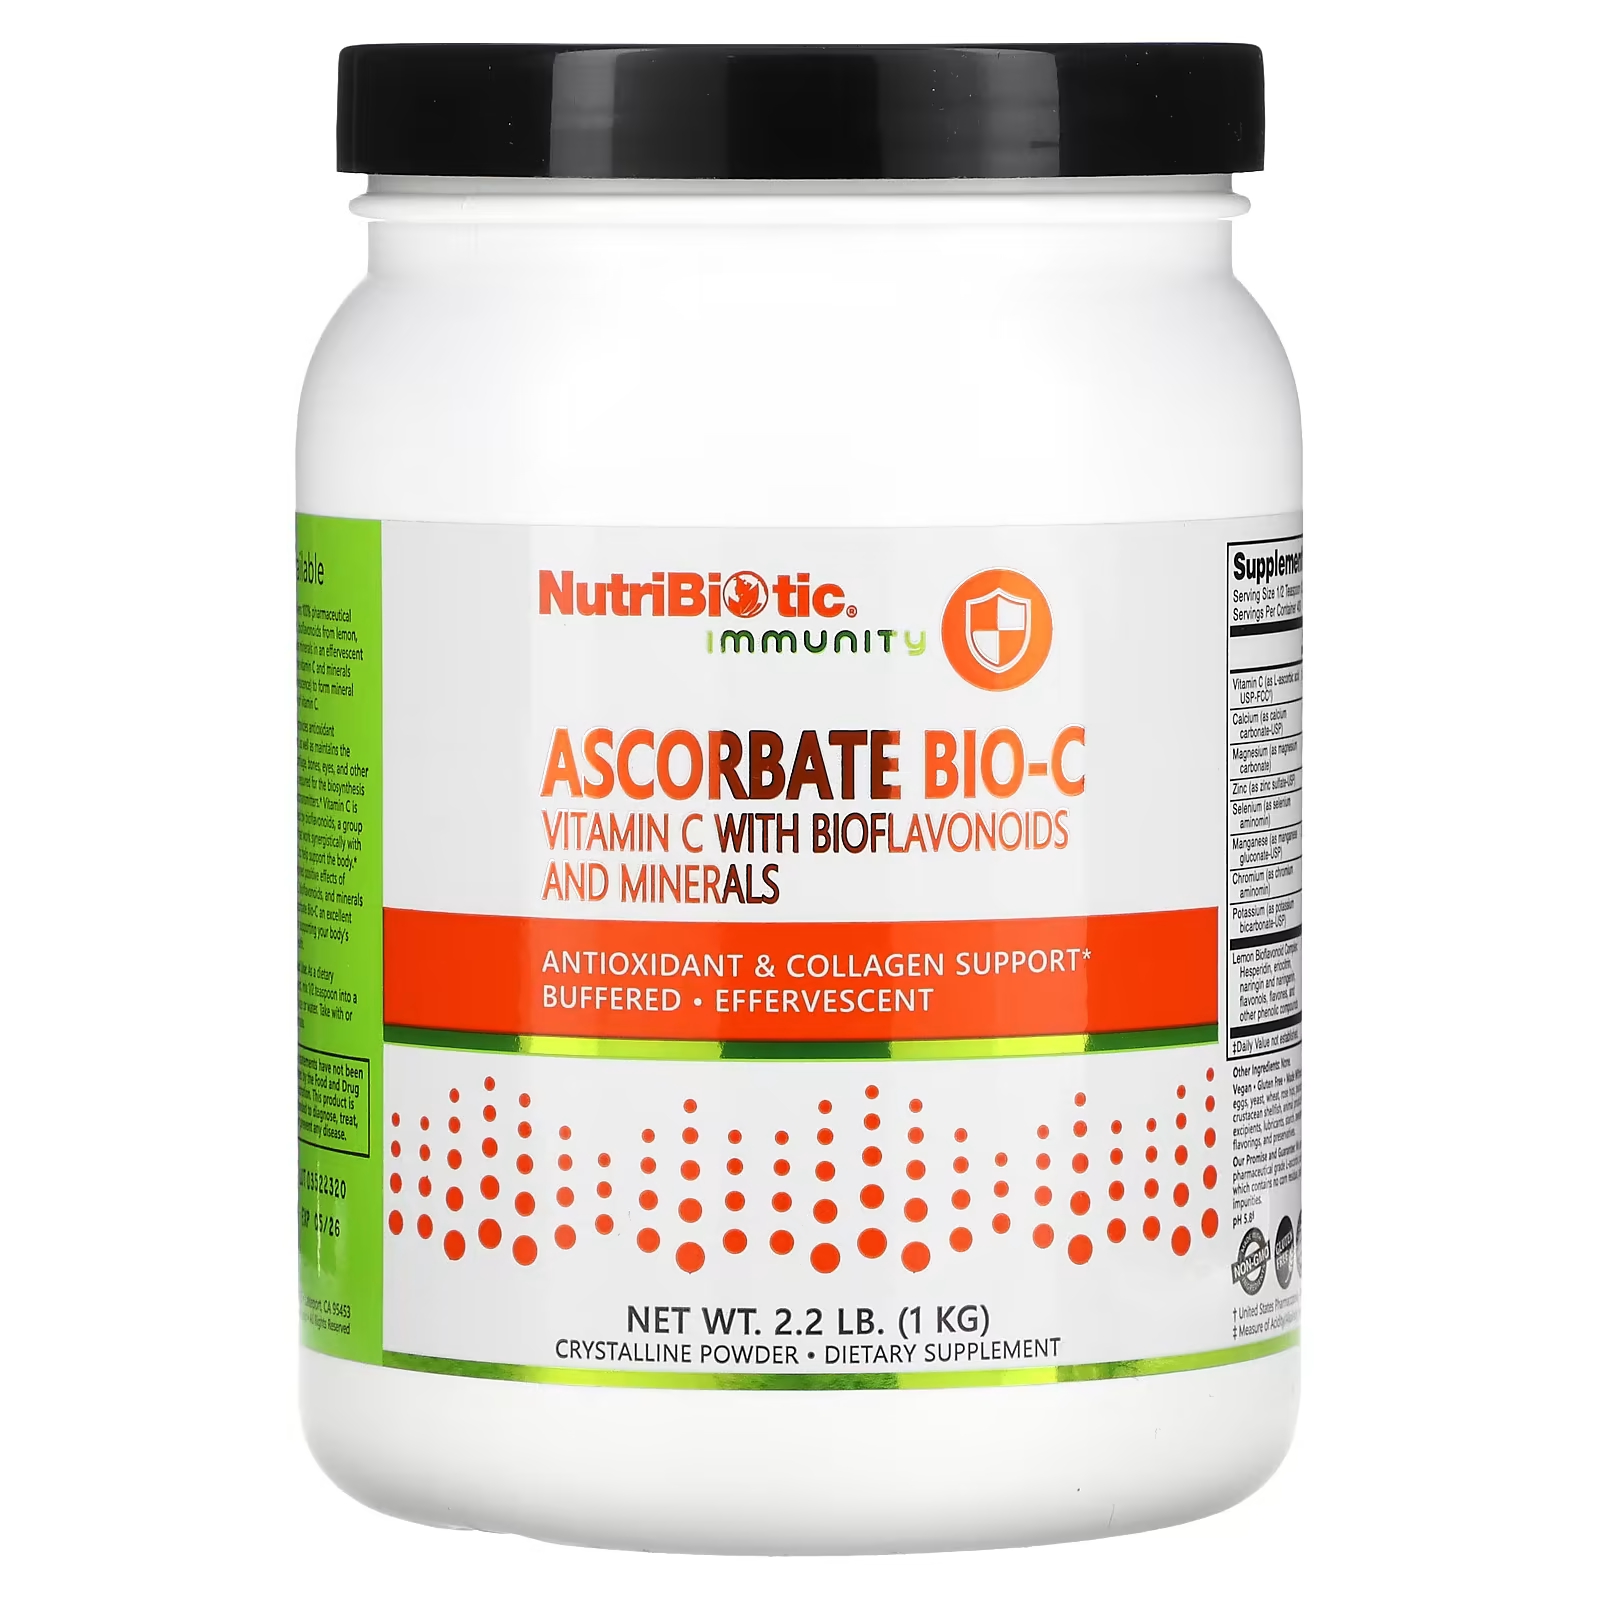 NutriBiotic Immunity Ascorbate Bio-C Витамин C с биофлавоноидами и минералами 2,2 фунта (1 кг)